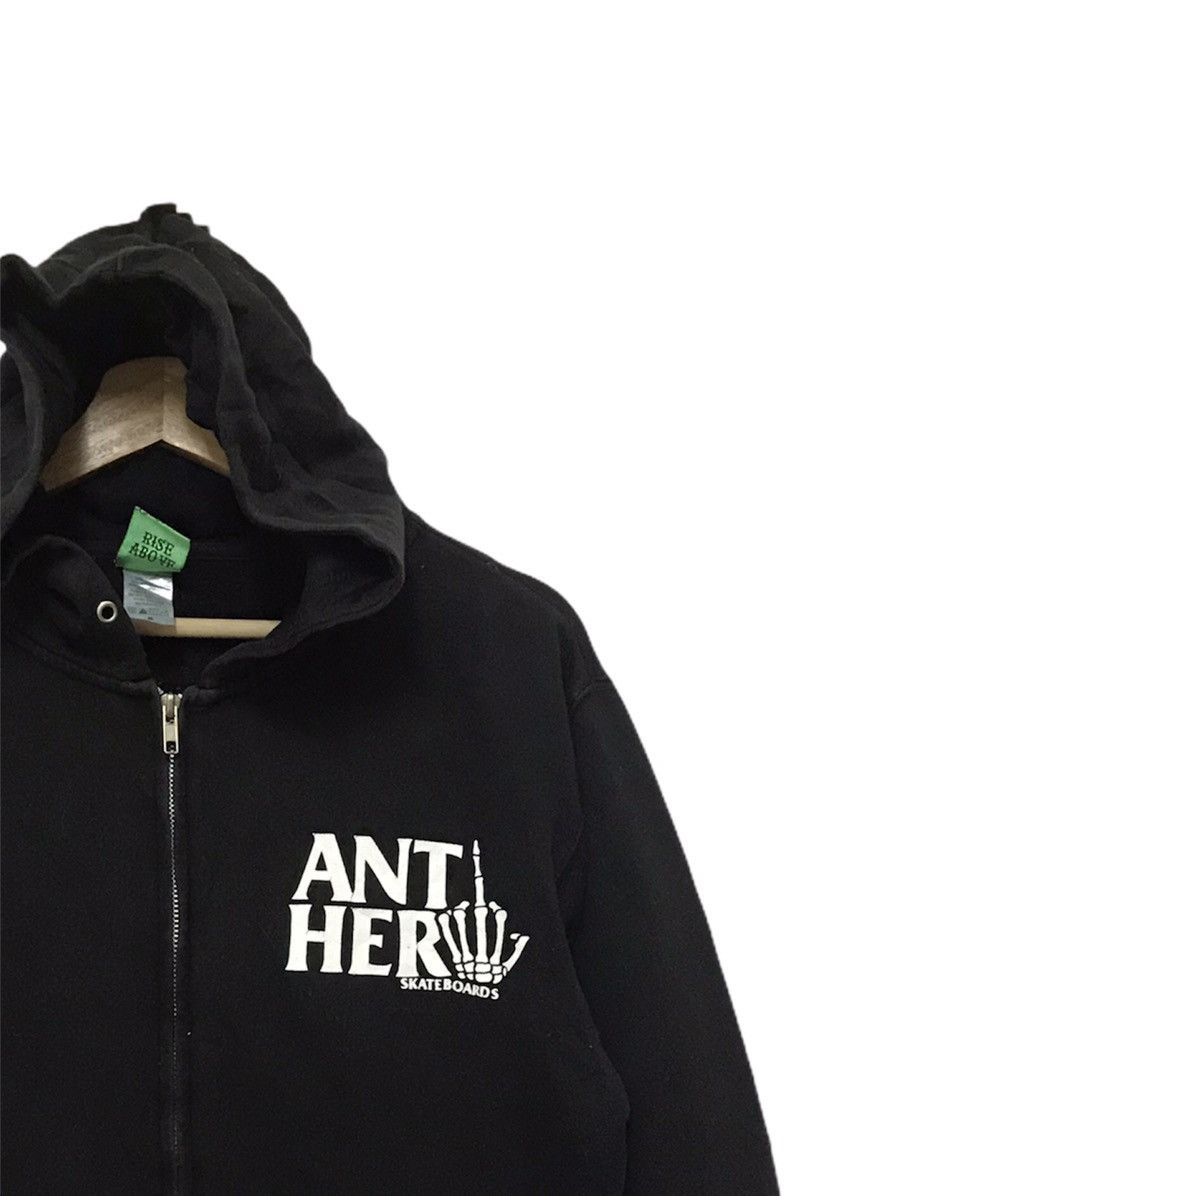 Antihero Anti Hero Hoodie Skateboard Sweatshirt Size US S / EU 44-46 / 1 - 3 Thumbnail